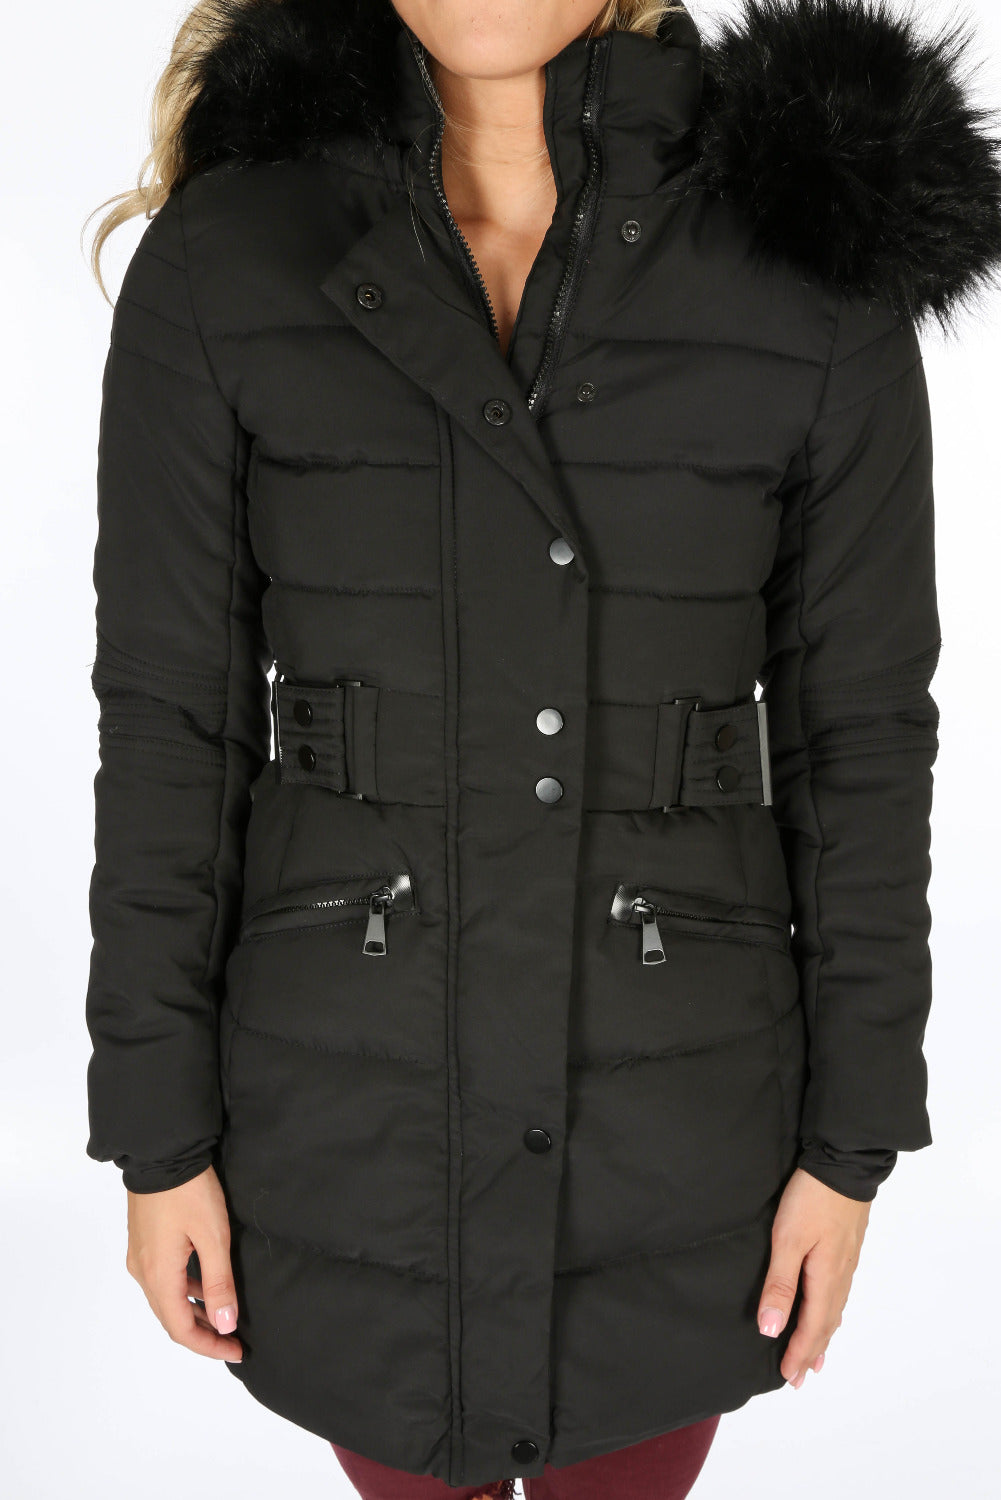 Black Long Puffer Coat With Matching Faux Fur